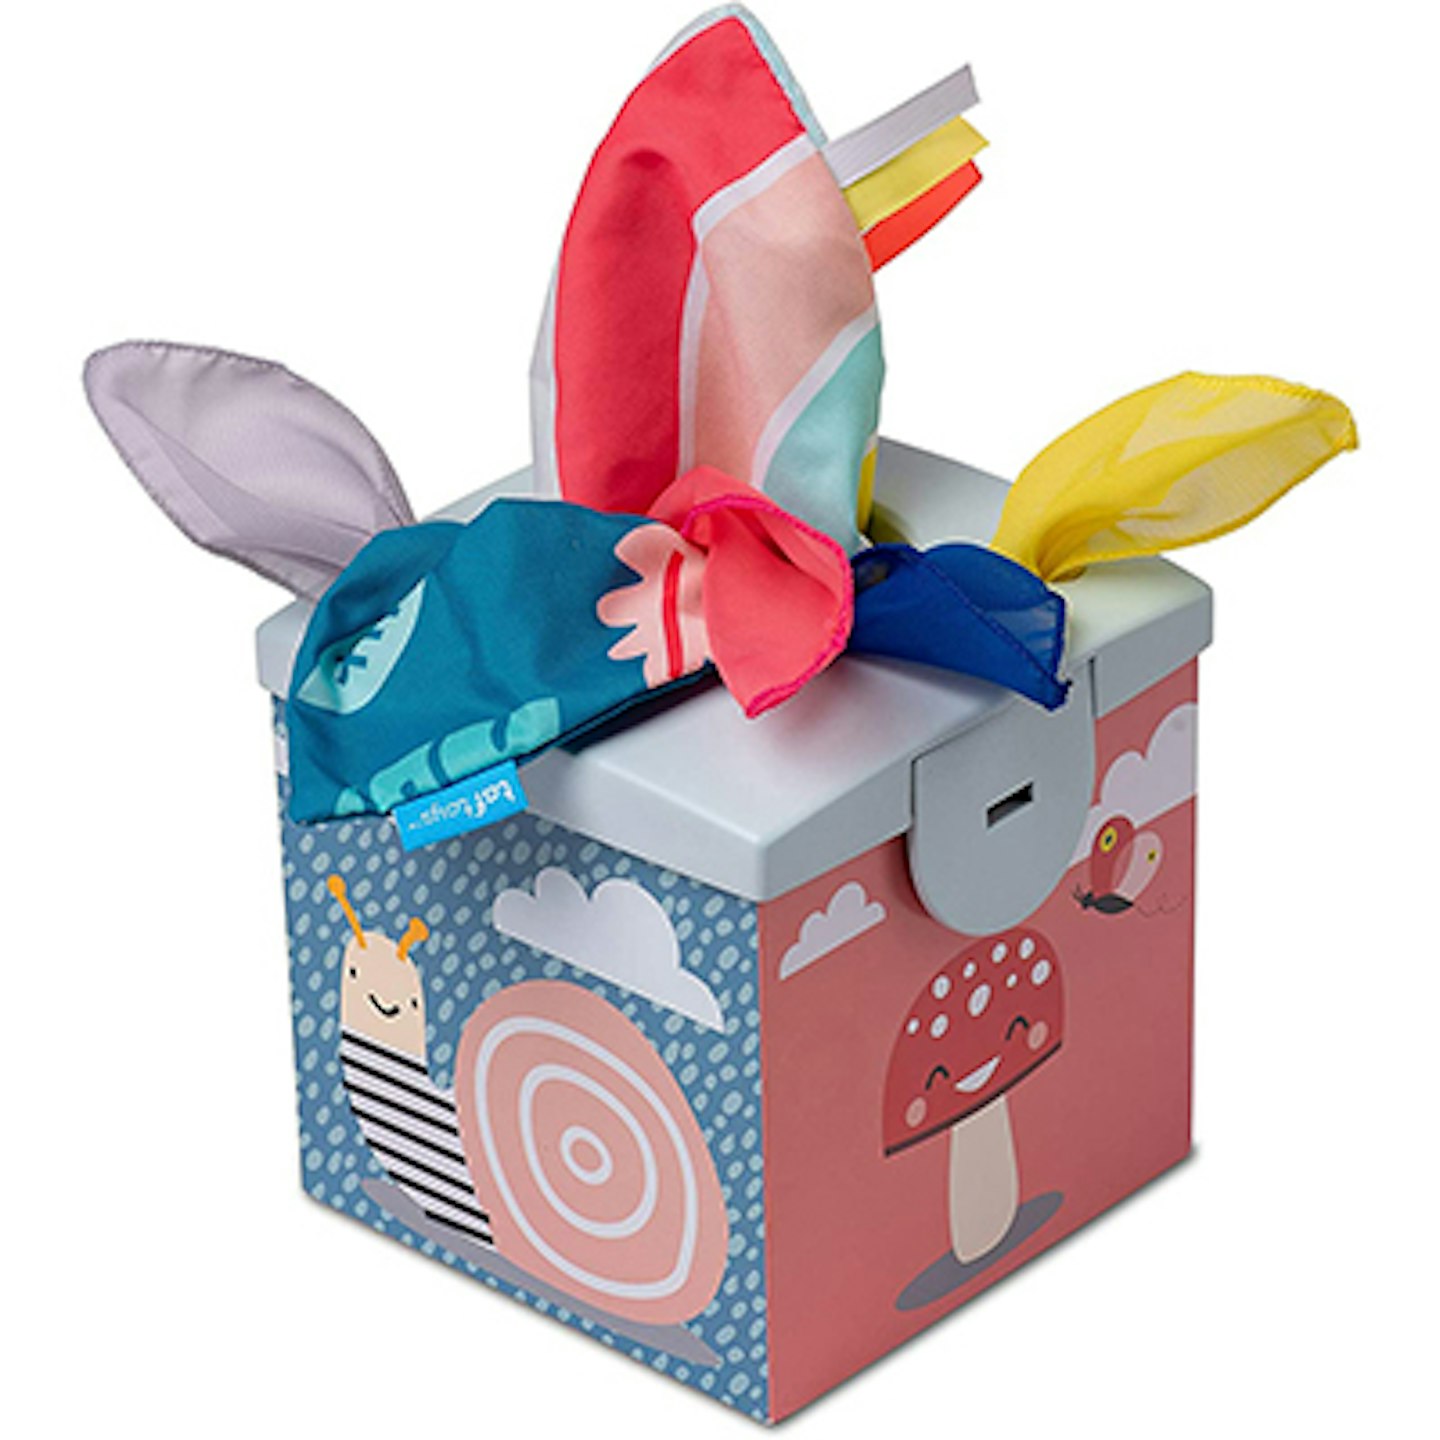 Taff's toys tissue sensory box